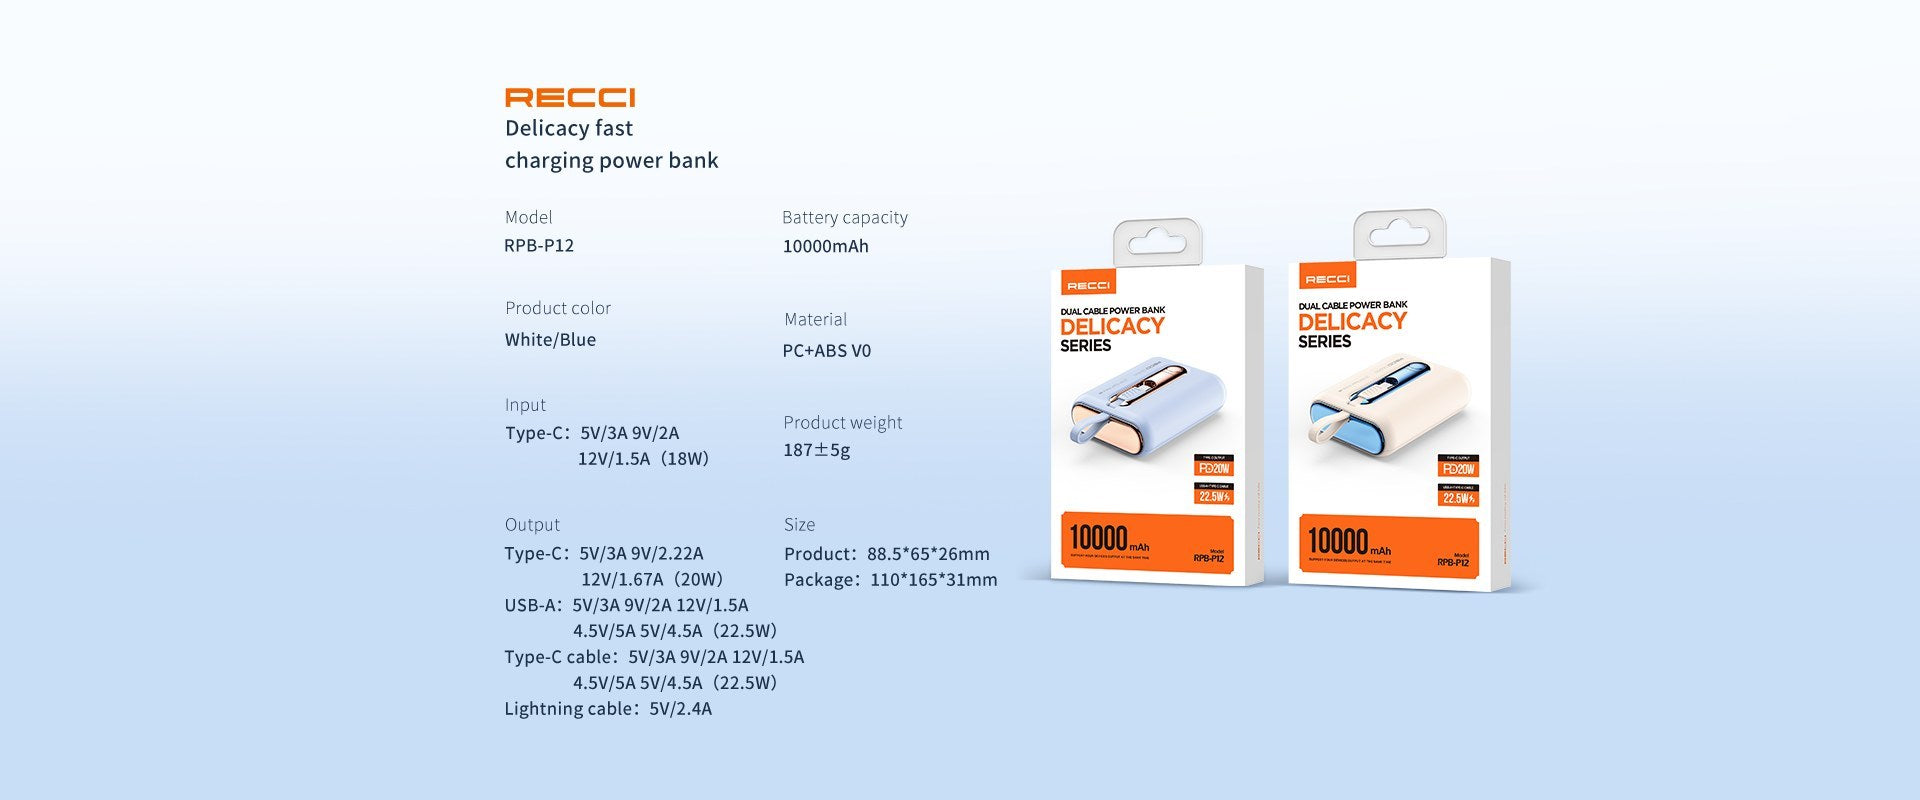 Recci Dual Cable Power Bank 10000mAh Fast Charging RPB-P12